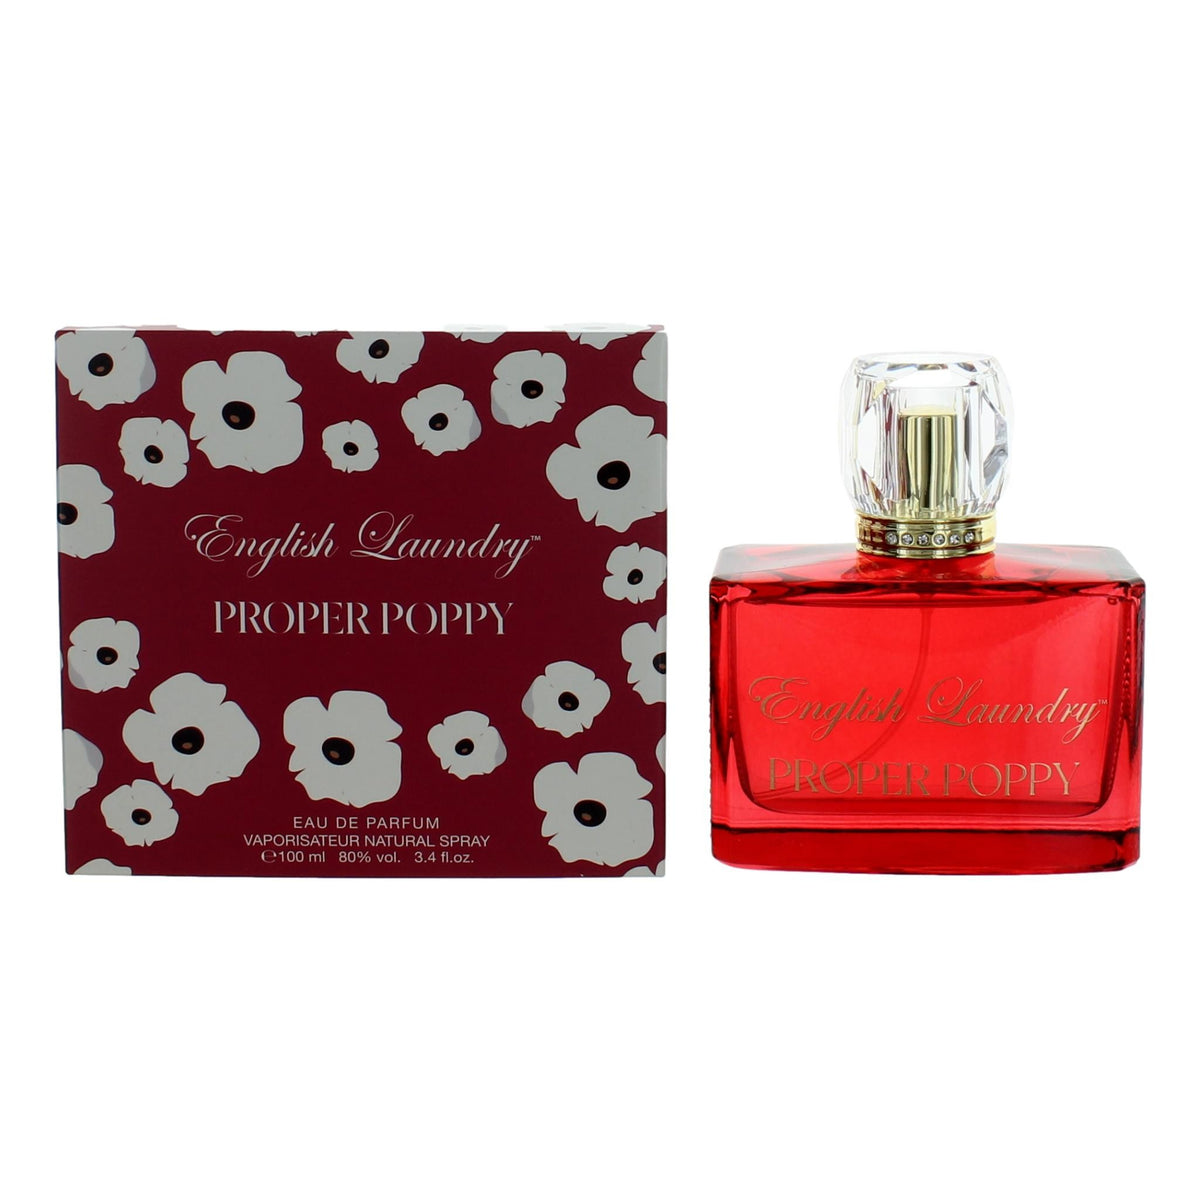 Proper Poppy by English Laundry, 3.4 oz Eau De Parfum Spray for Women